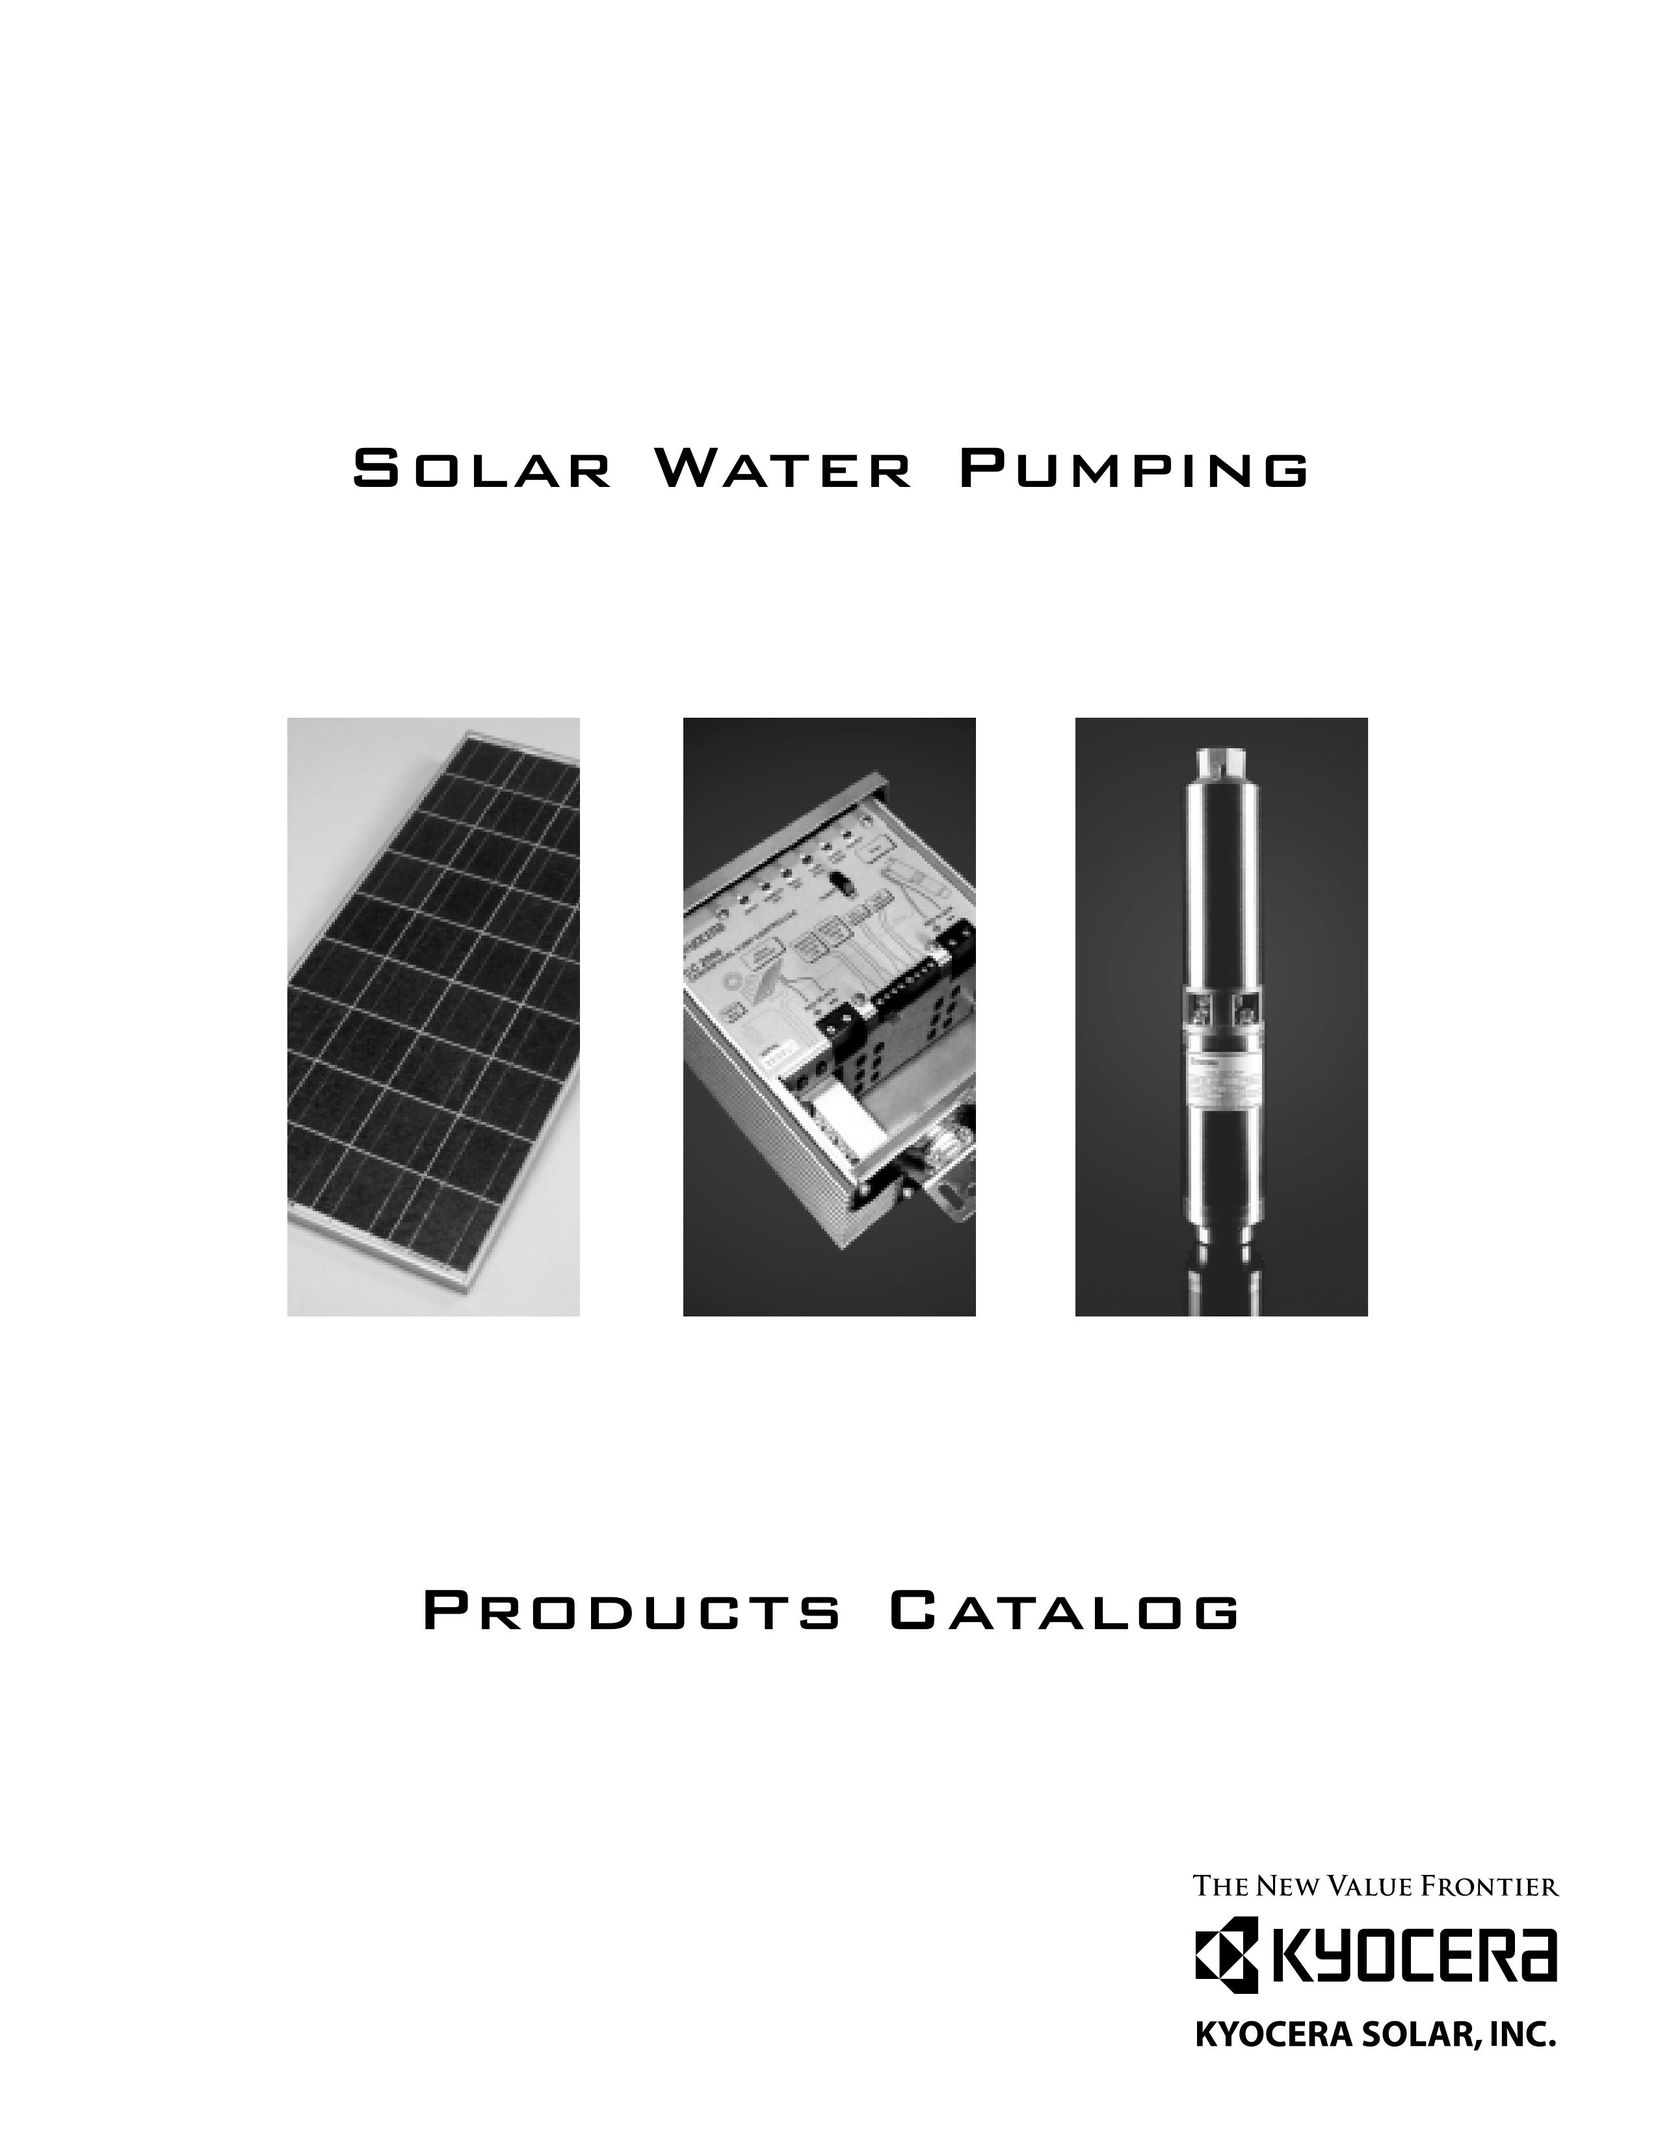 Kyocera 85221 Water Pump User Manual